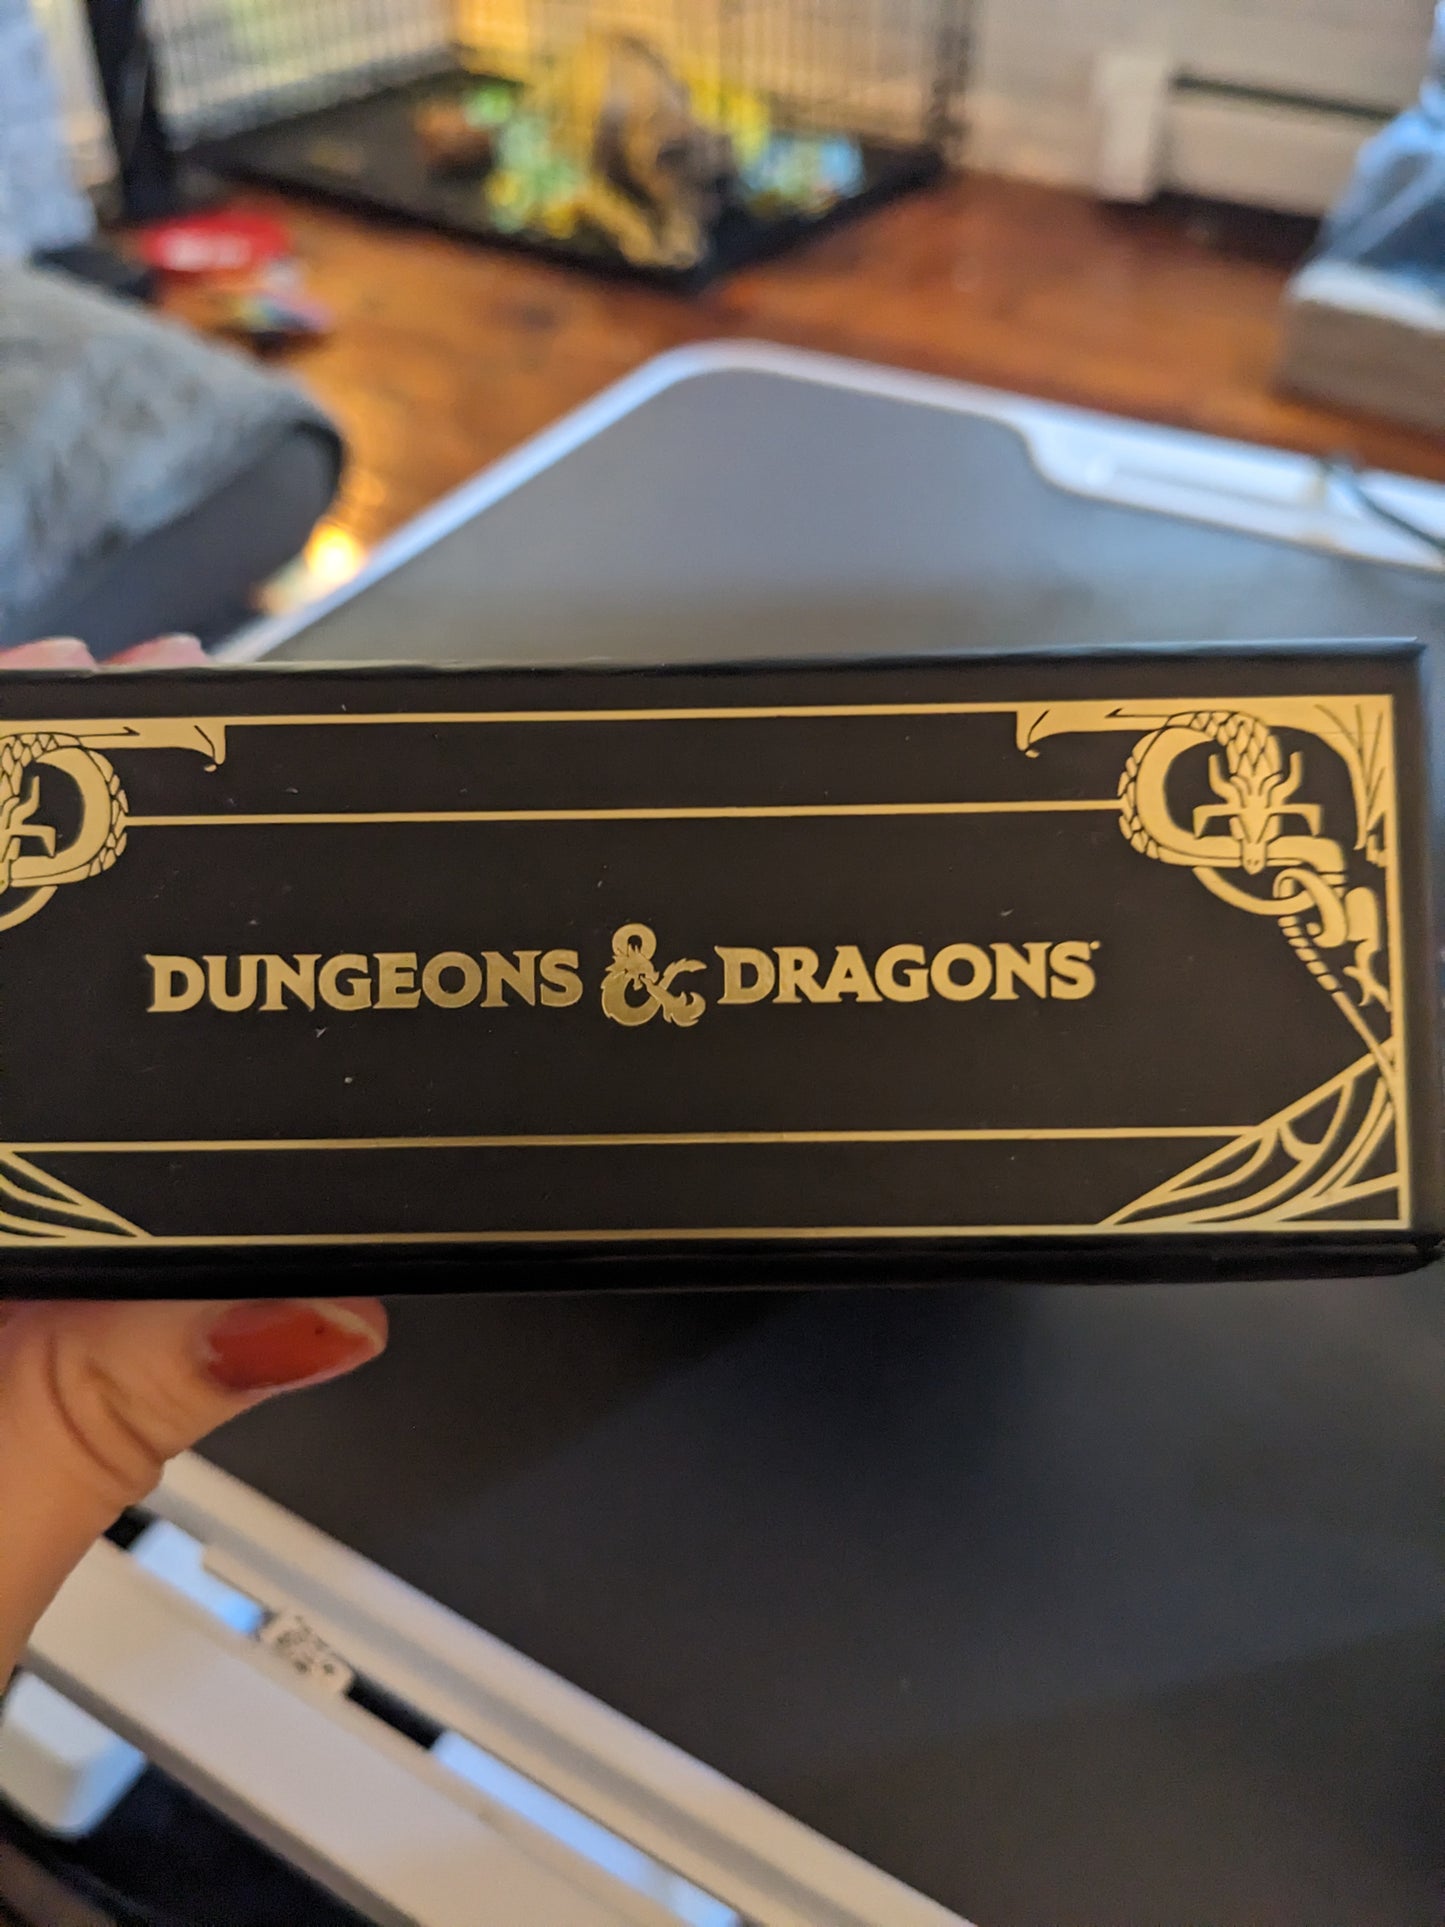 The Official Dungeons & Dragons Tarot Deck